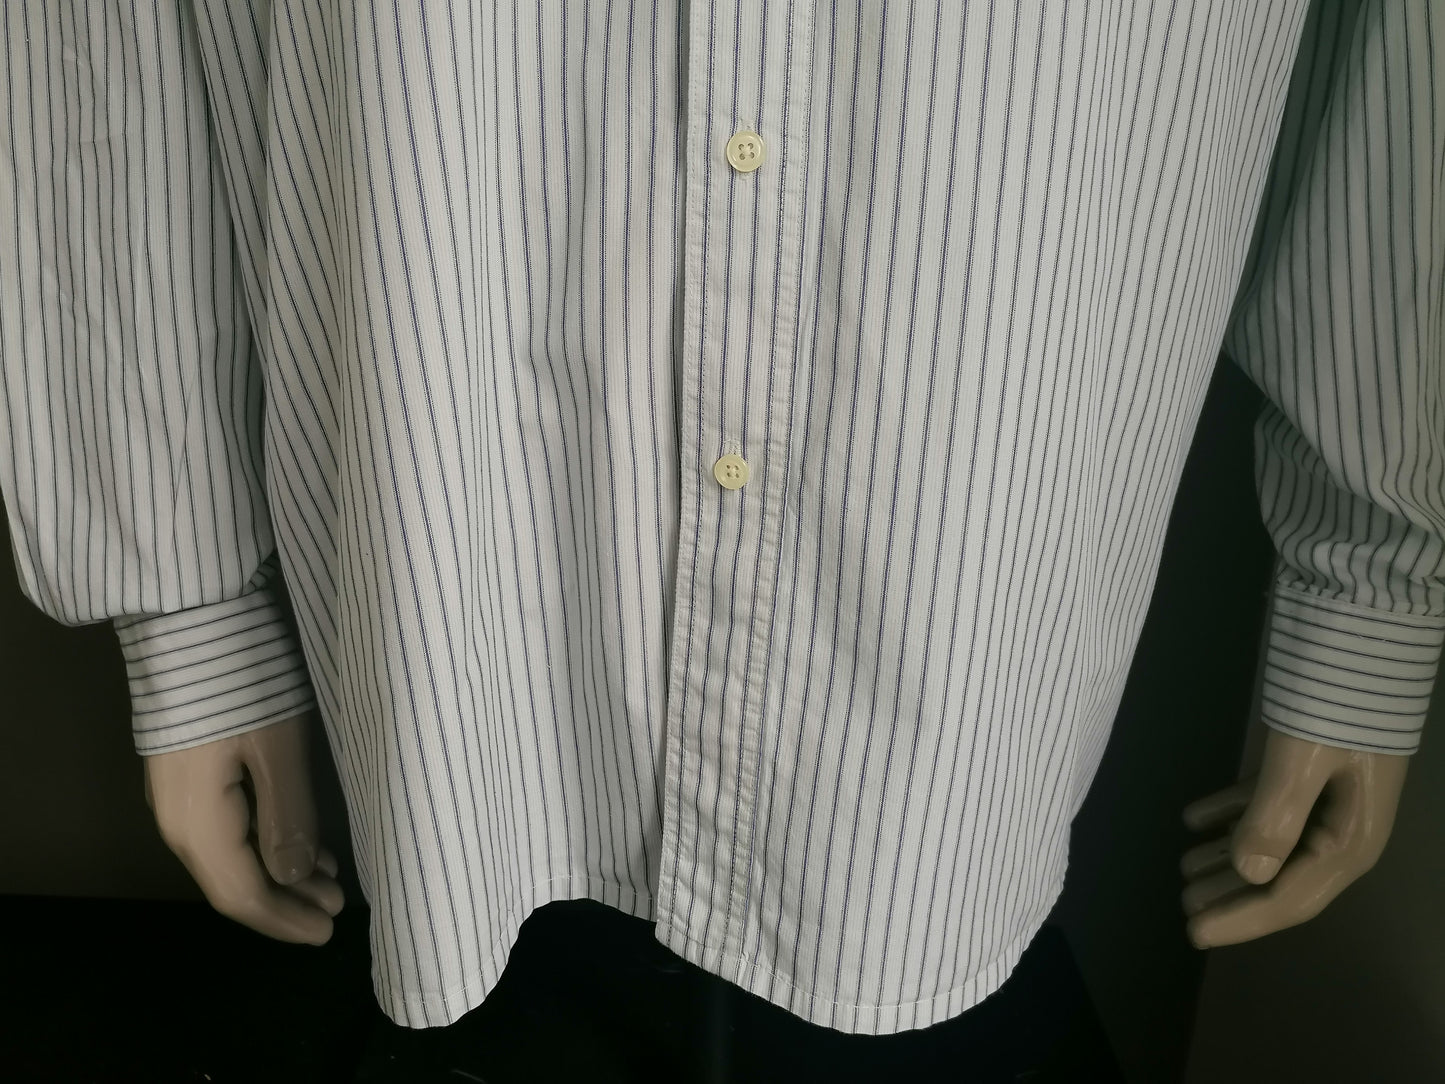 Vintage Him Collection Shirt. Blue beige striped. Size XXL / 2XL.